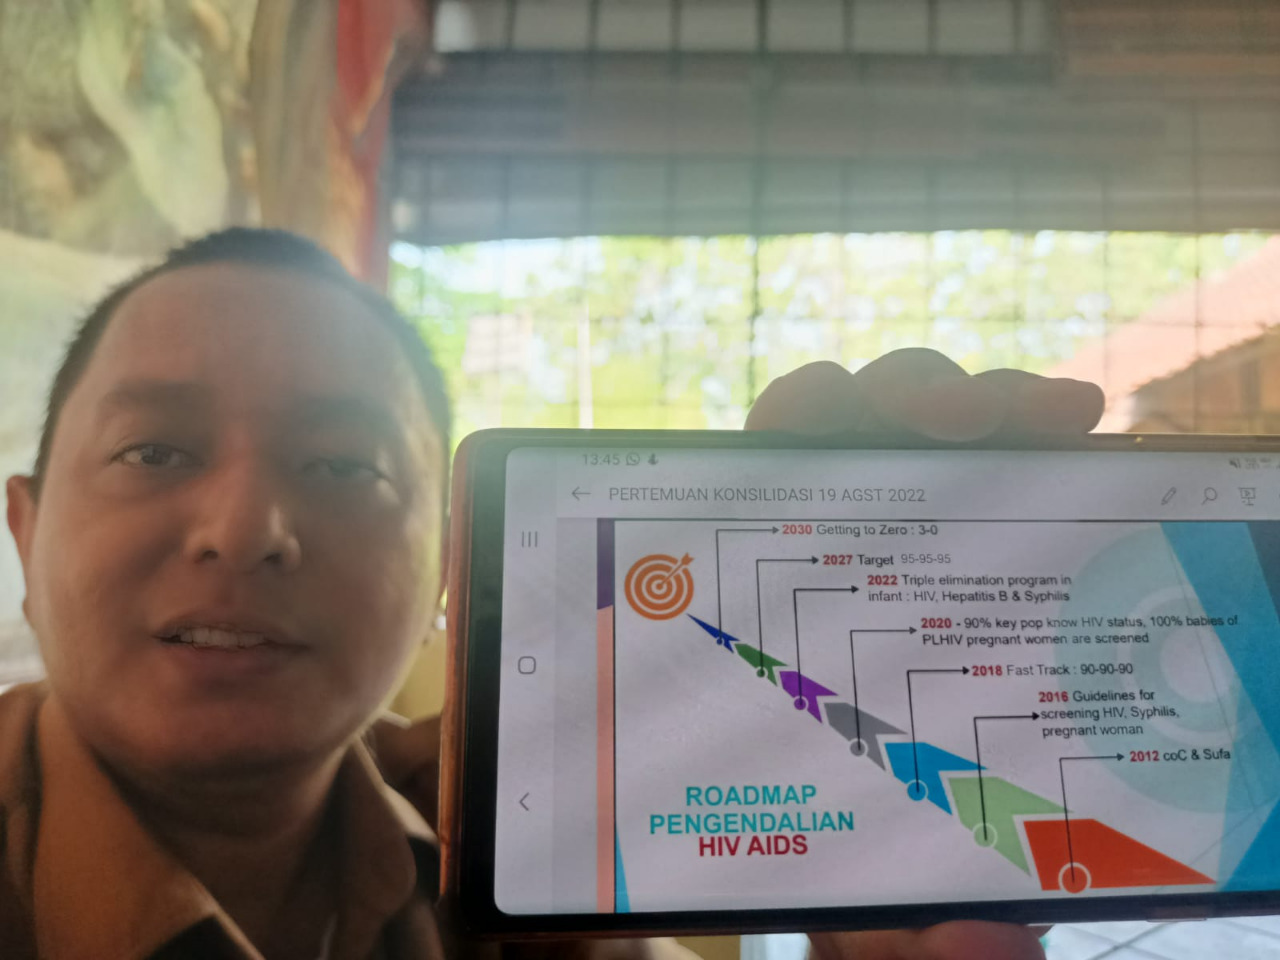 Gambaran Kasus HIV AIDS di Kabupaten Cirebon, Langgaan PSK 2 Kasus, Ibu Hamil 10, Gay 46